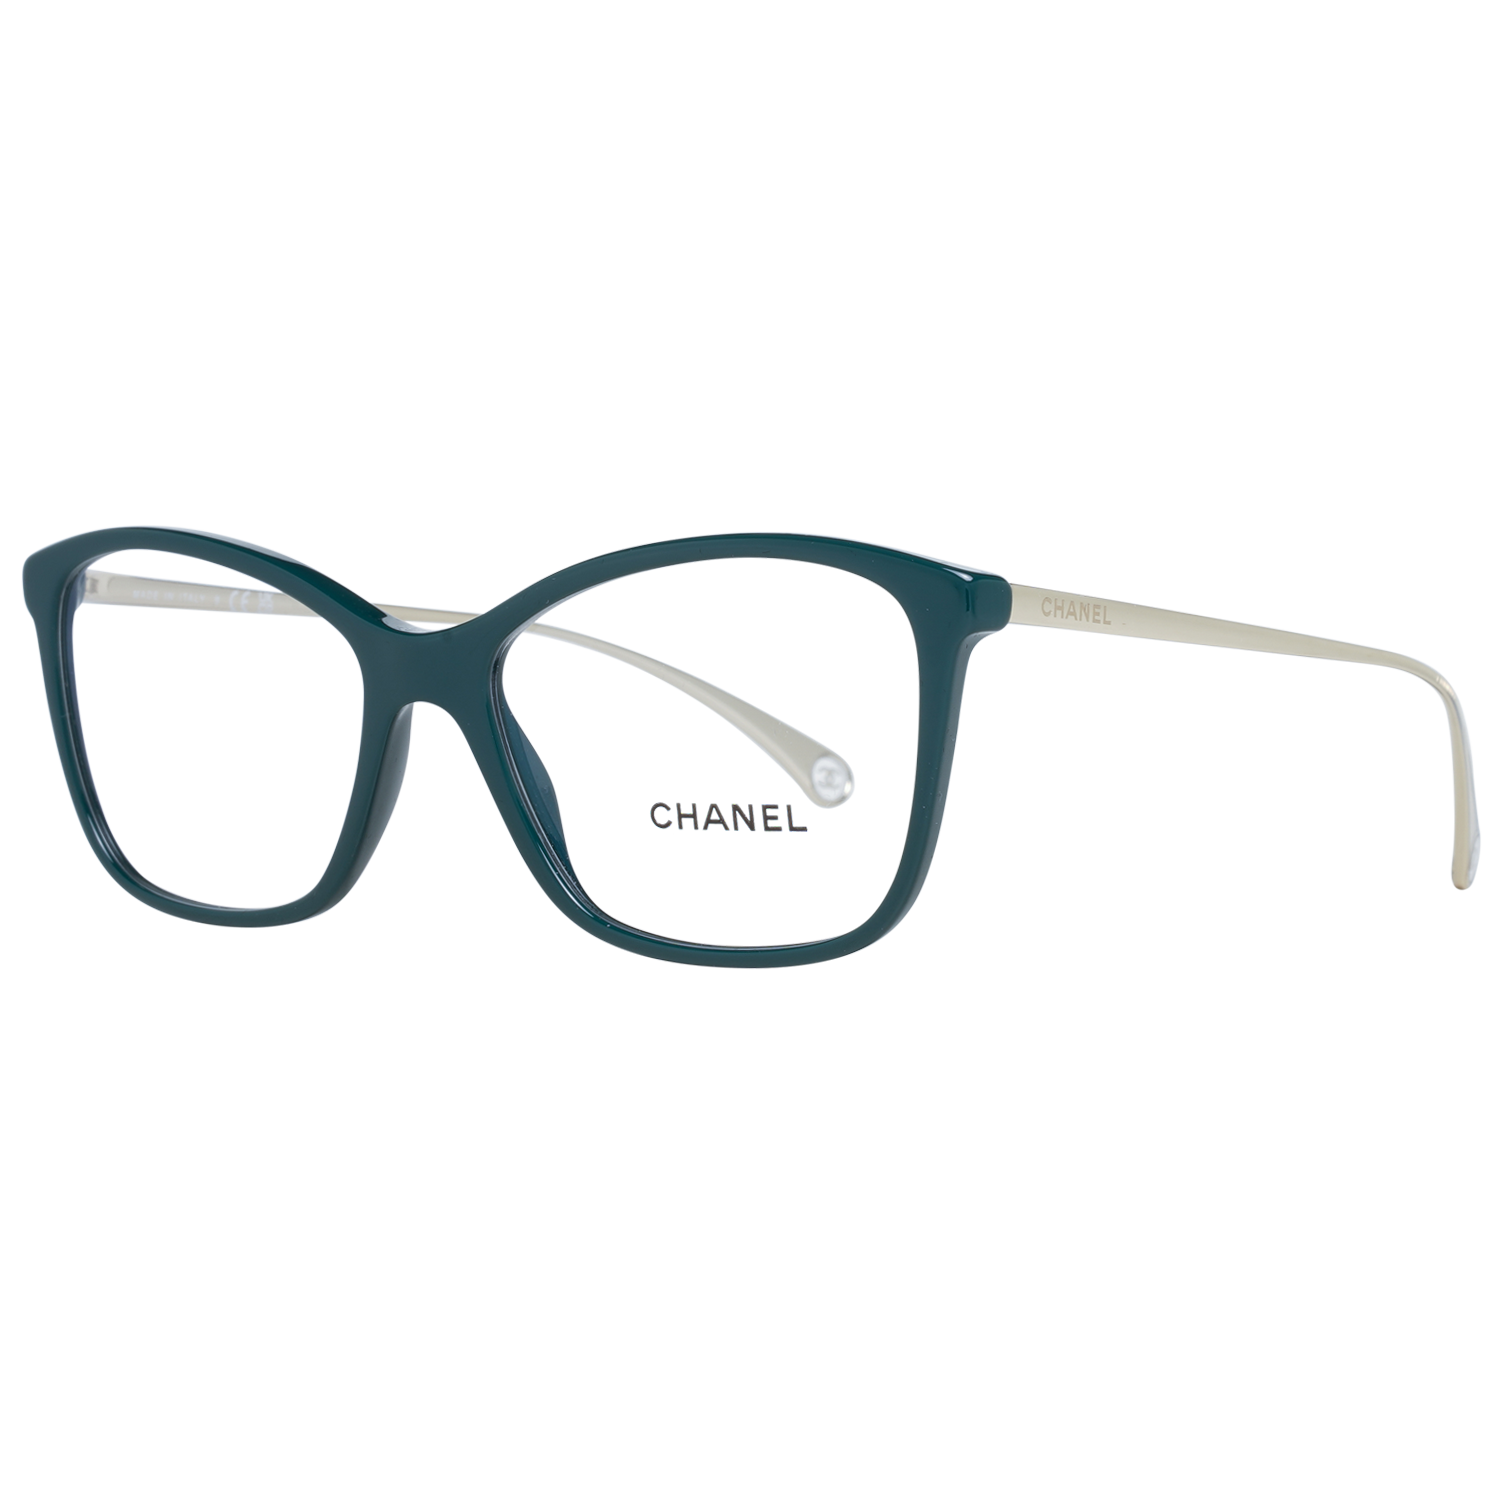 chanel eyeglass frames